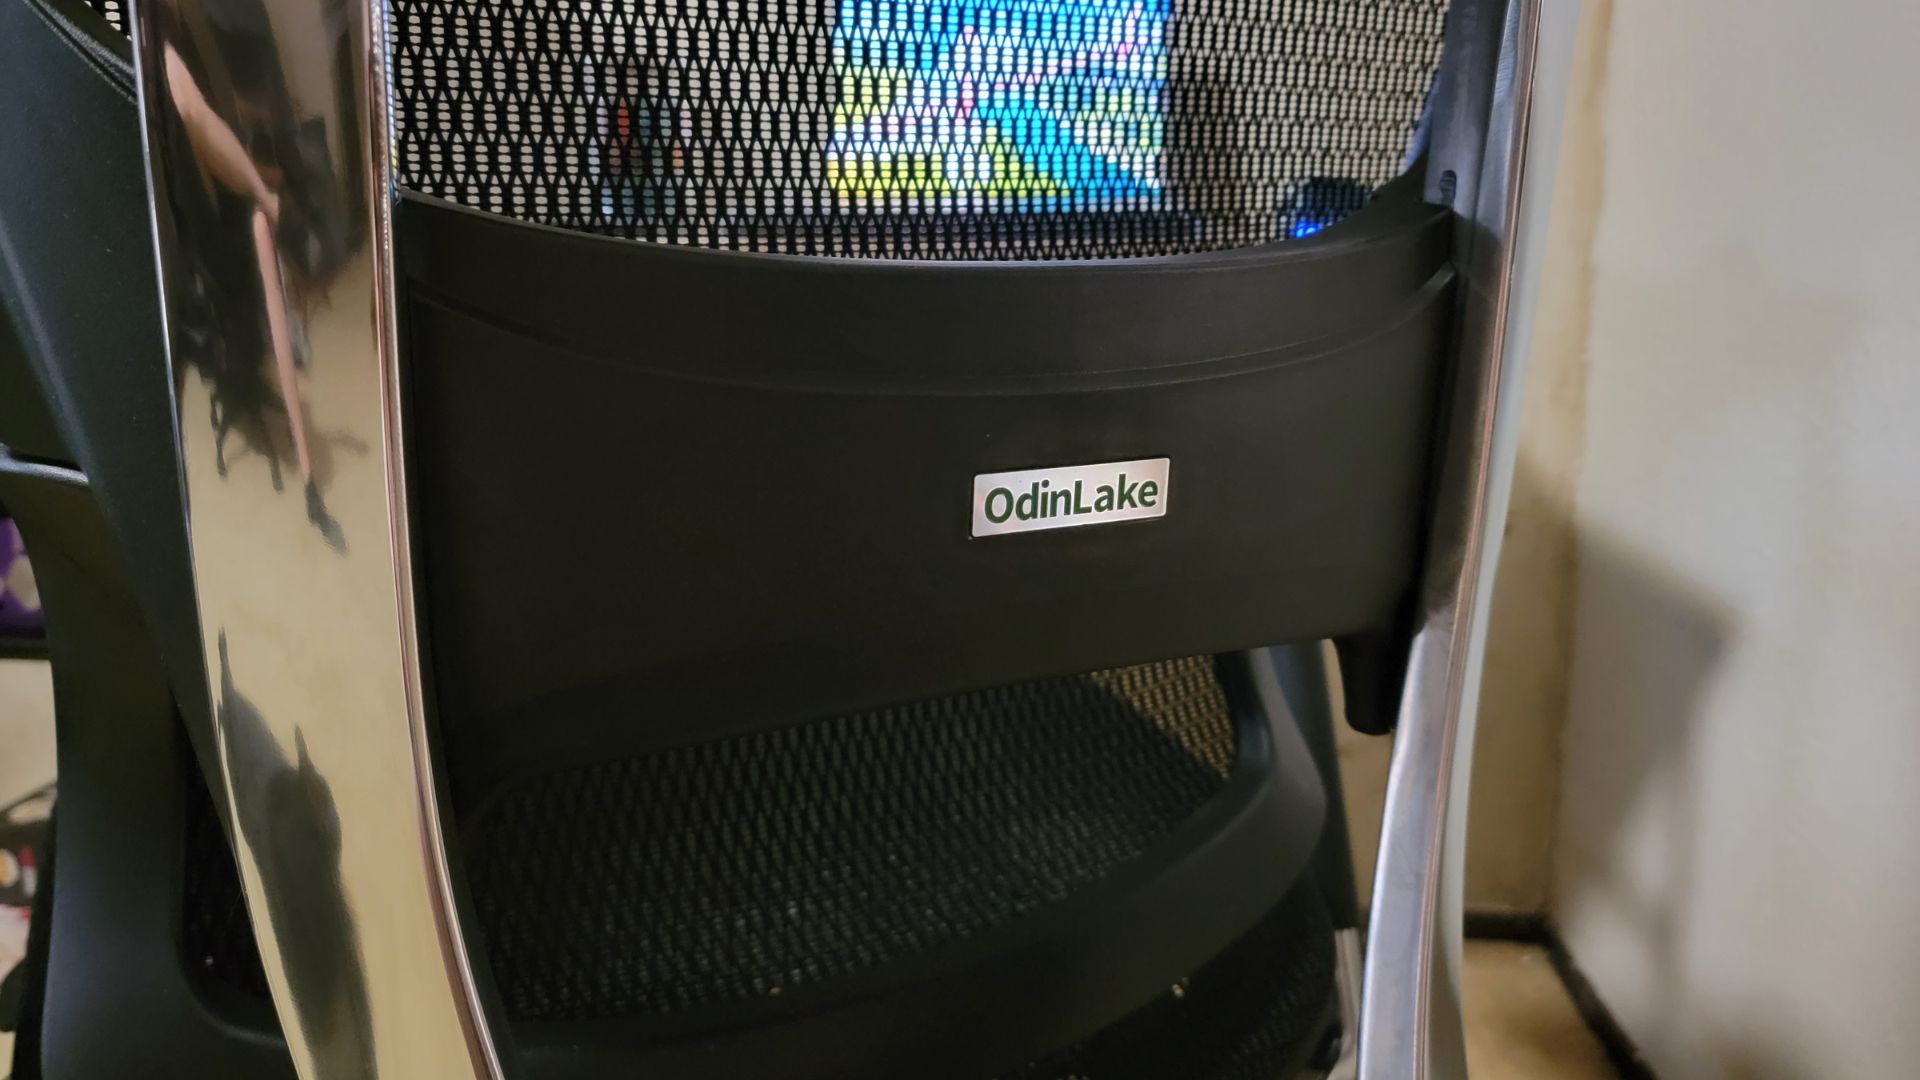 OdinLake Ergo Plus 743 ergonomic chair rear frame and logo